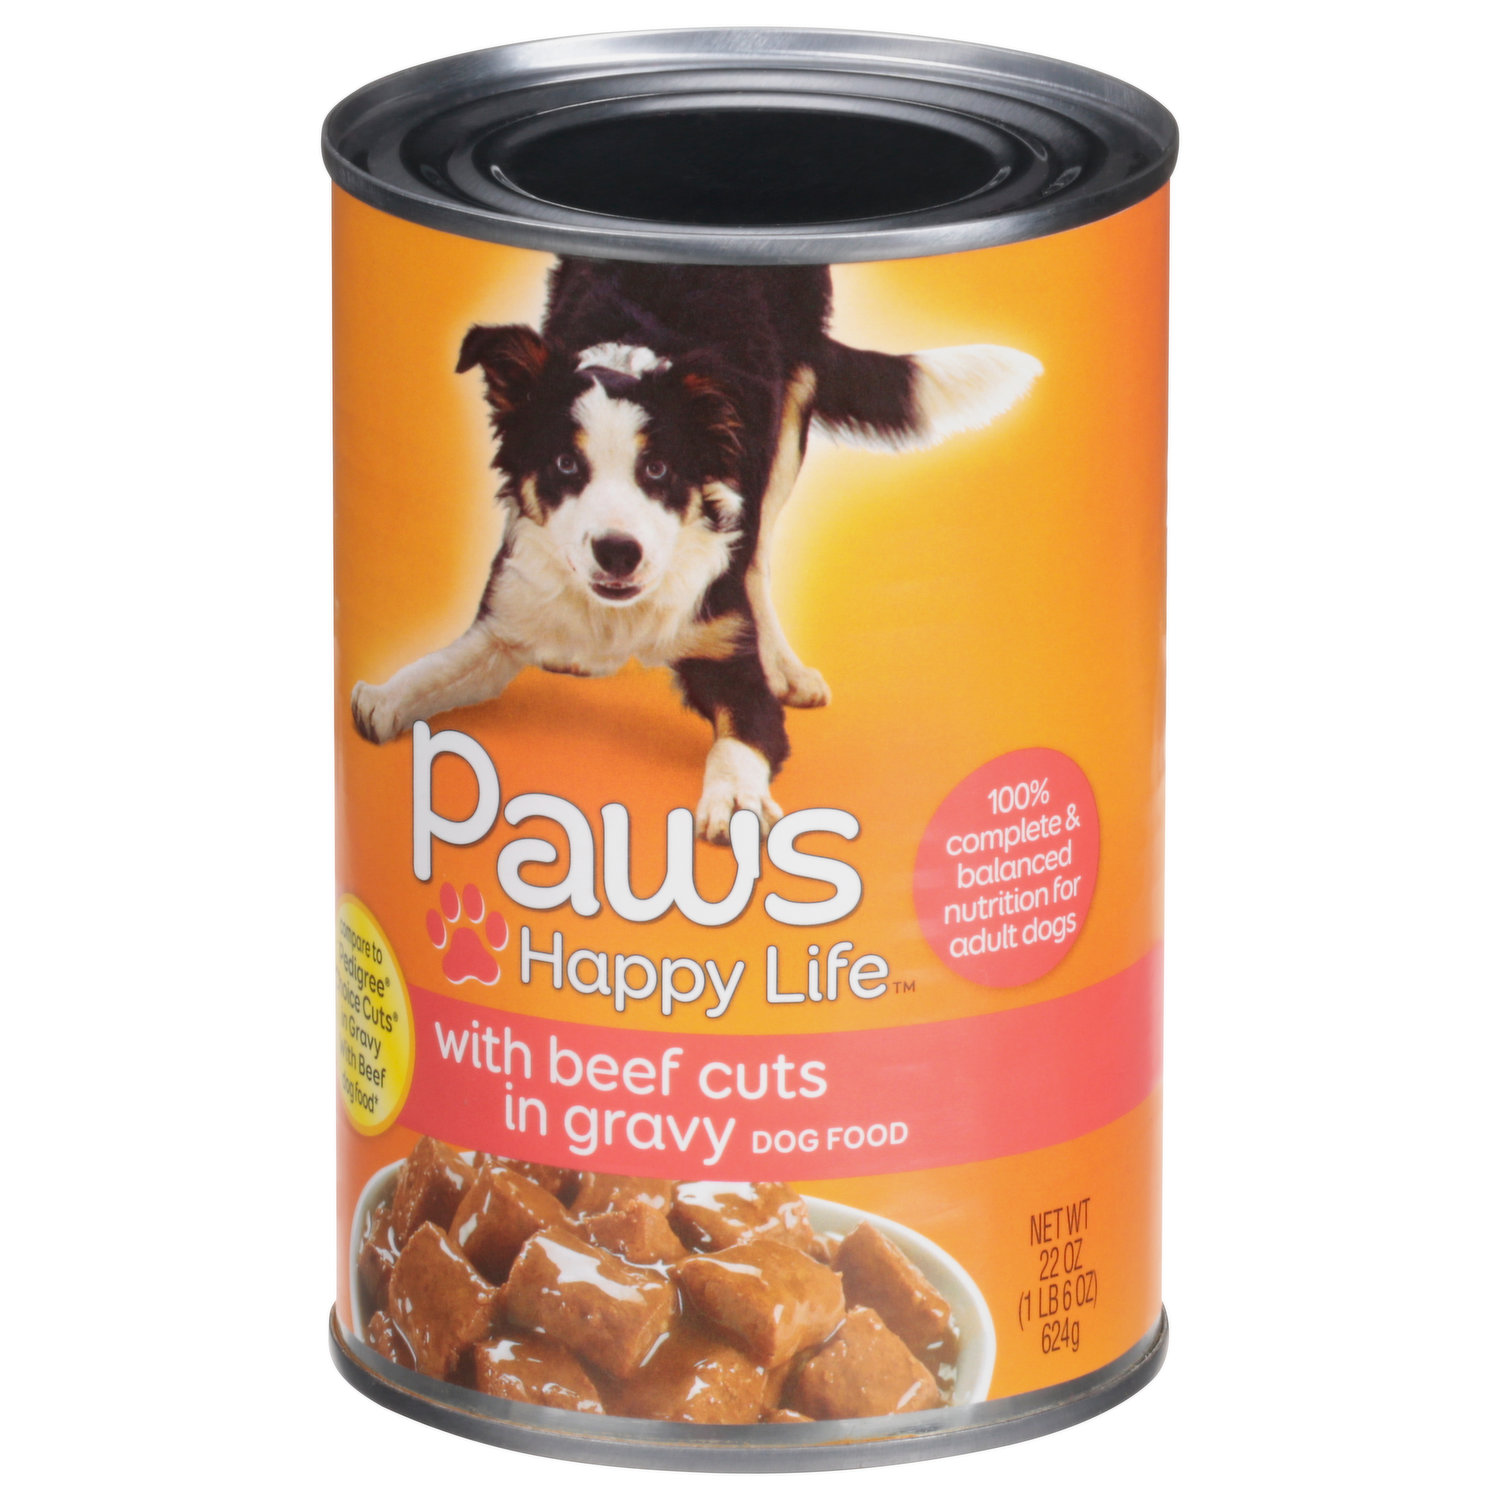 is it ok to put gravy on dog food